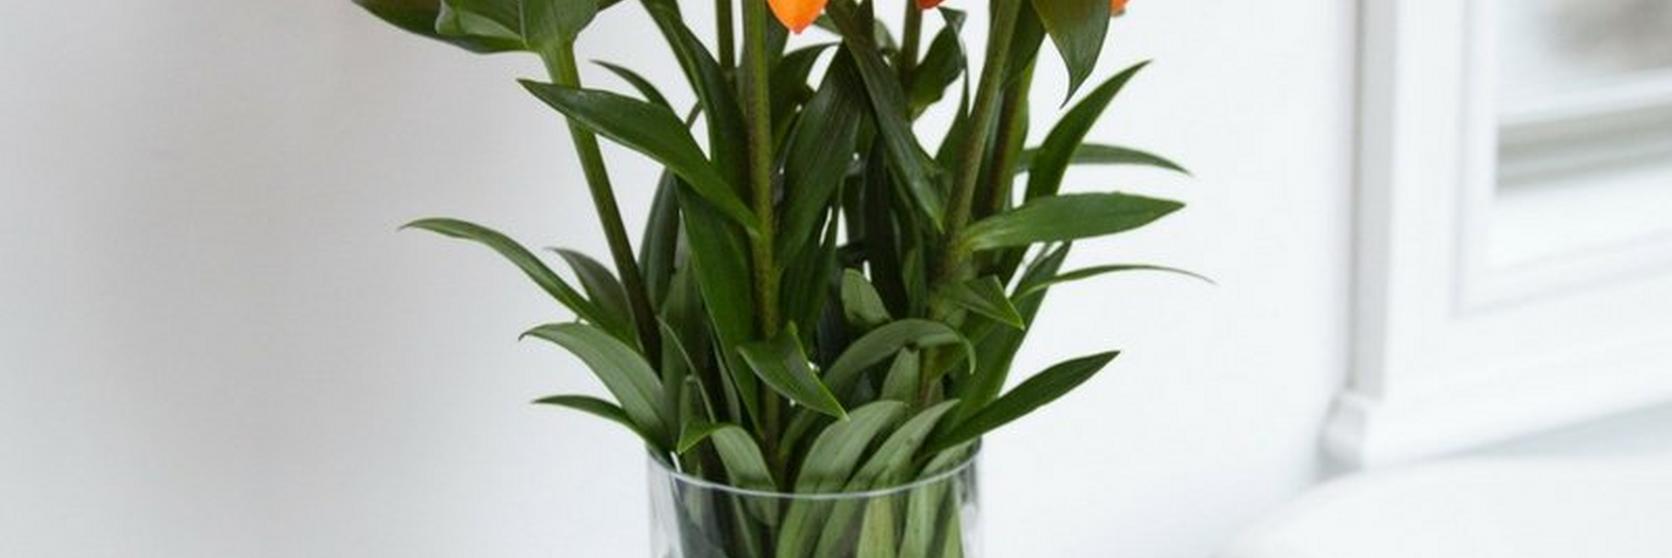 orange-lilies-in-a-vase